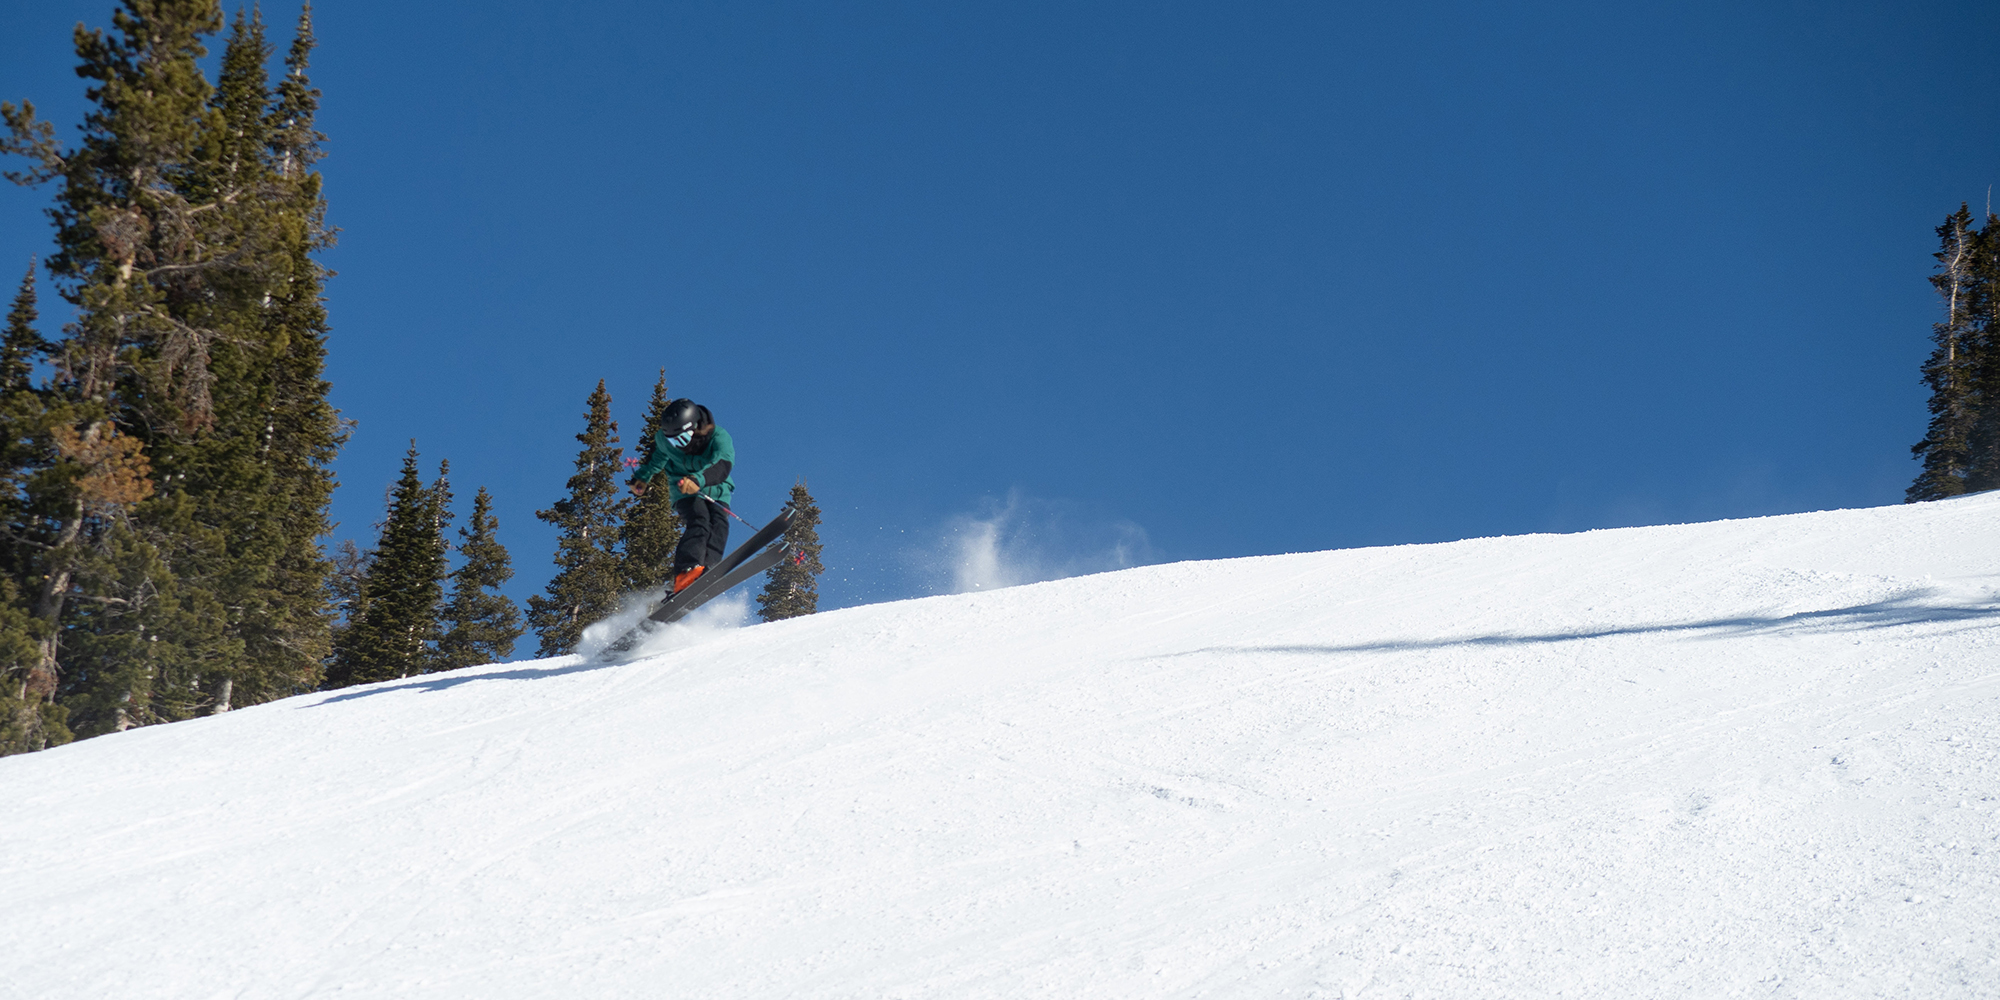 Luke Koppa reviews the Season Aero Ski for Blister